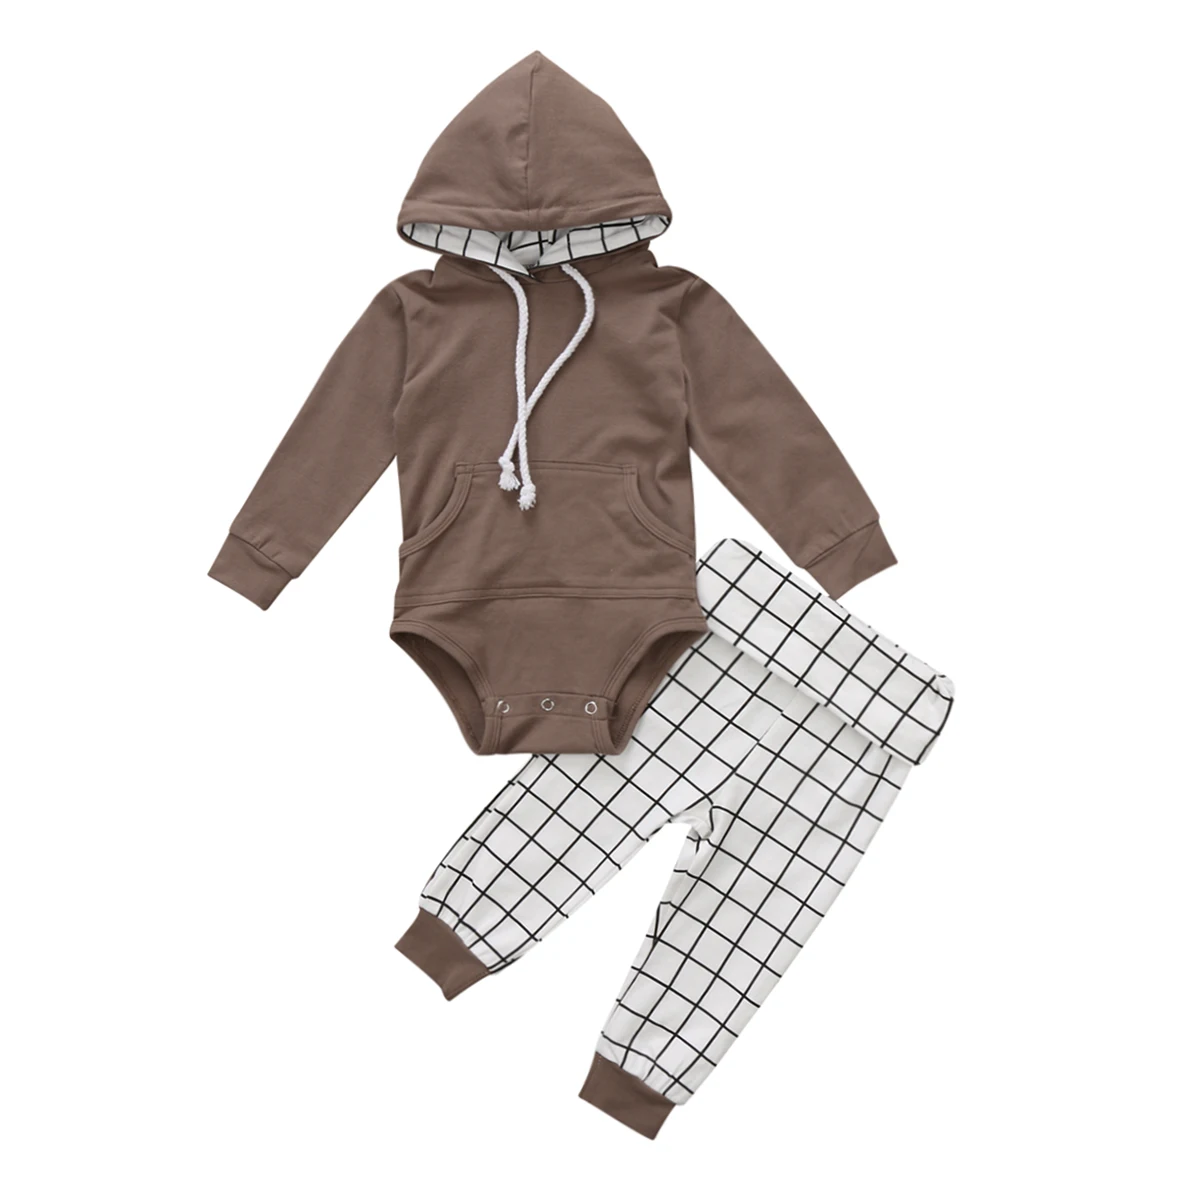 

Khaki Plaids Coffee Newborn Infant Baby Boy Autumn Warm Hooded Outfits Clothes Tops Romper+Pants Set